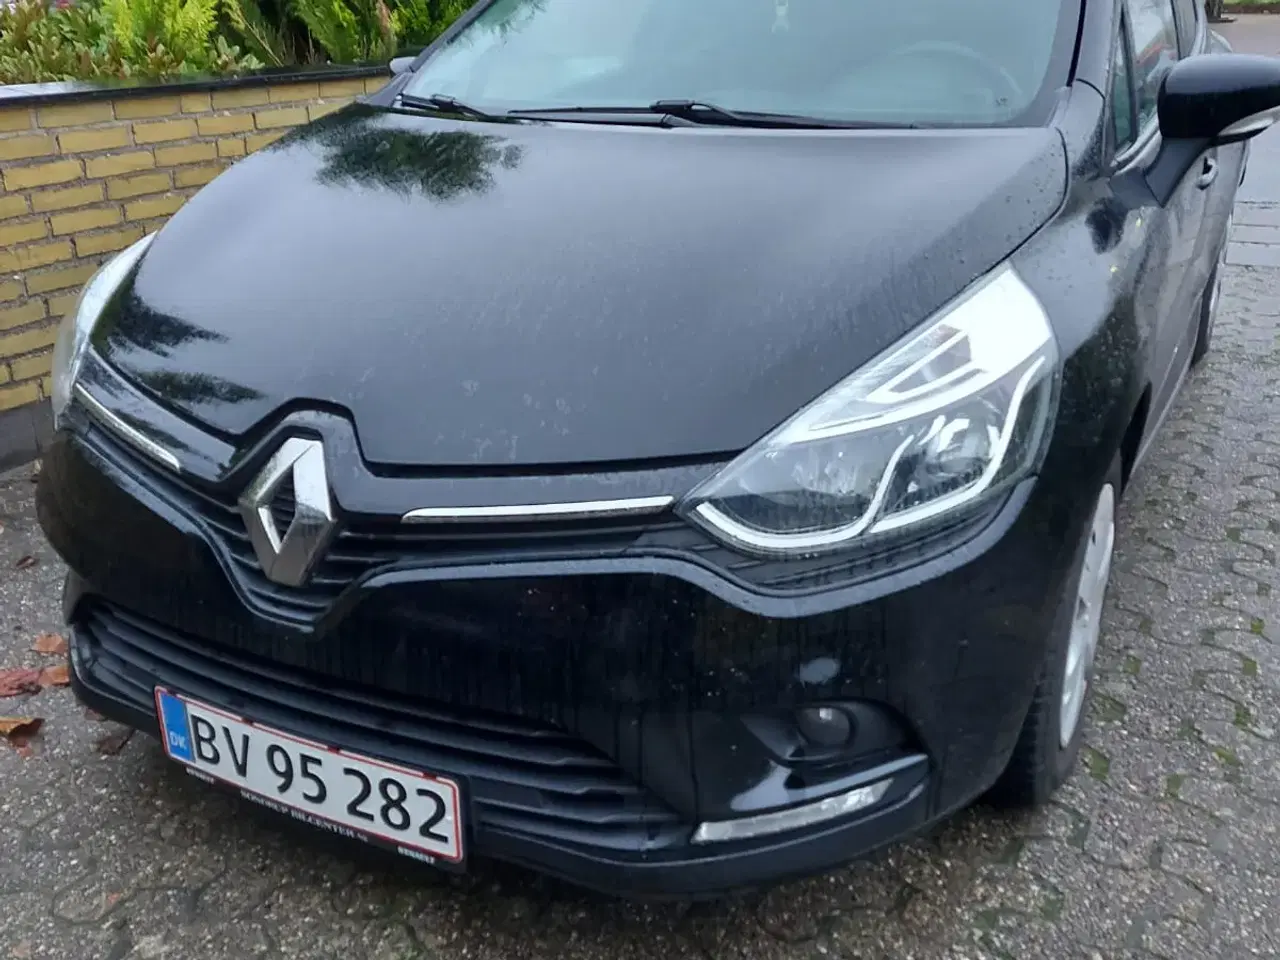 Billede 1 - Renault clio iv 1,5 dci 90